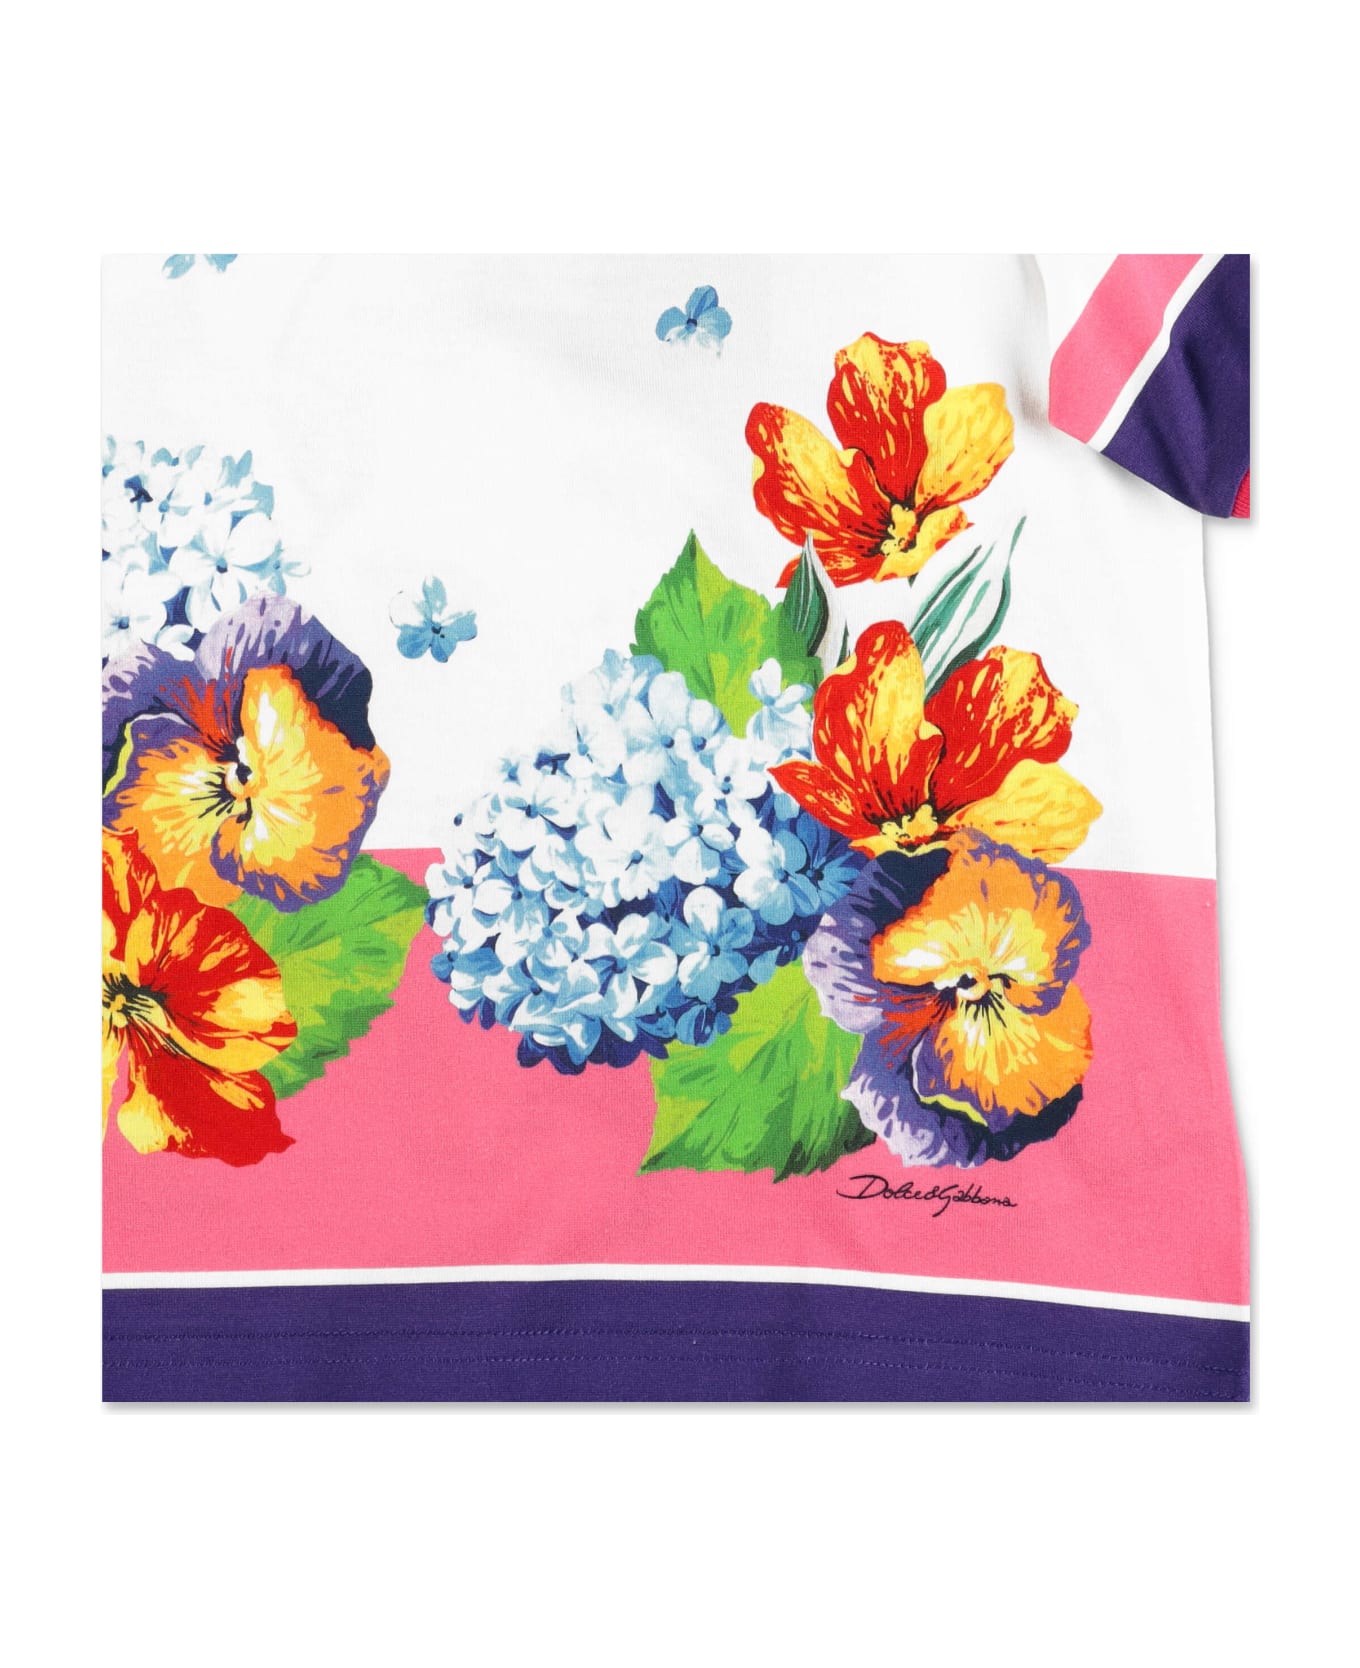 Dolce & Gabbana T-shirt Stampa Floreale In Jersey Di Cotone - Multicolor